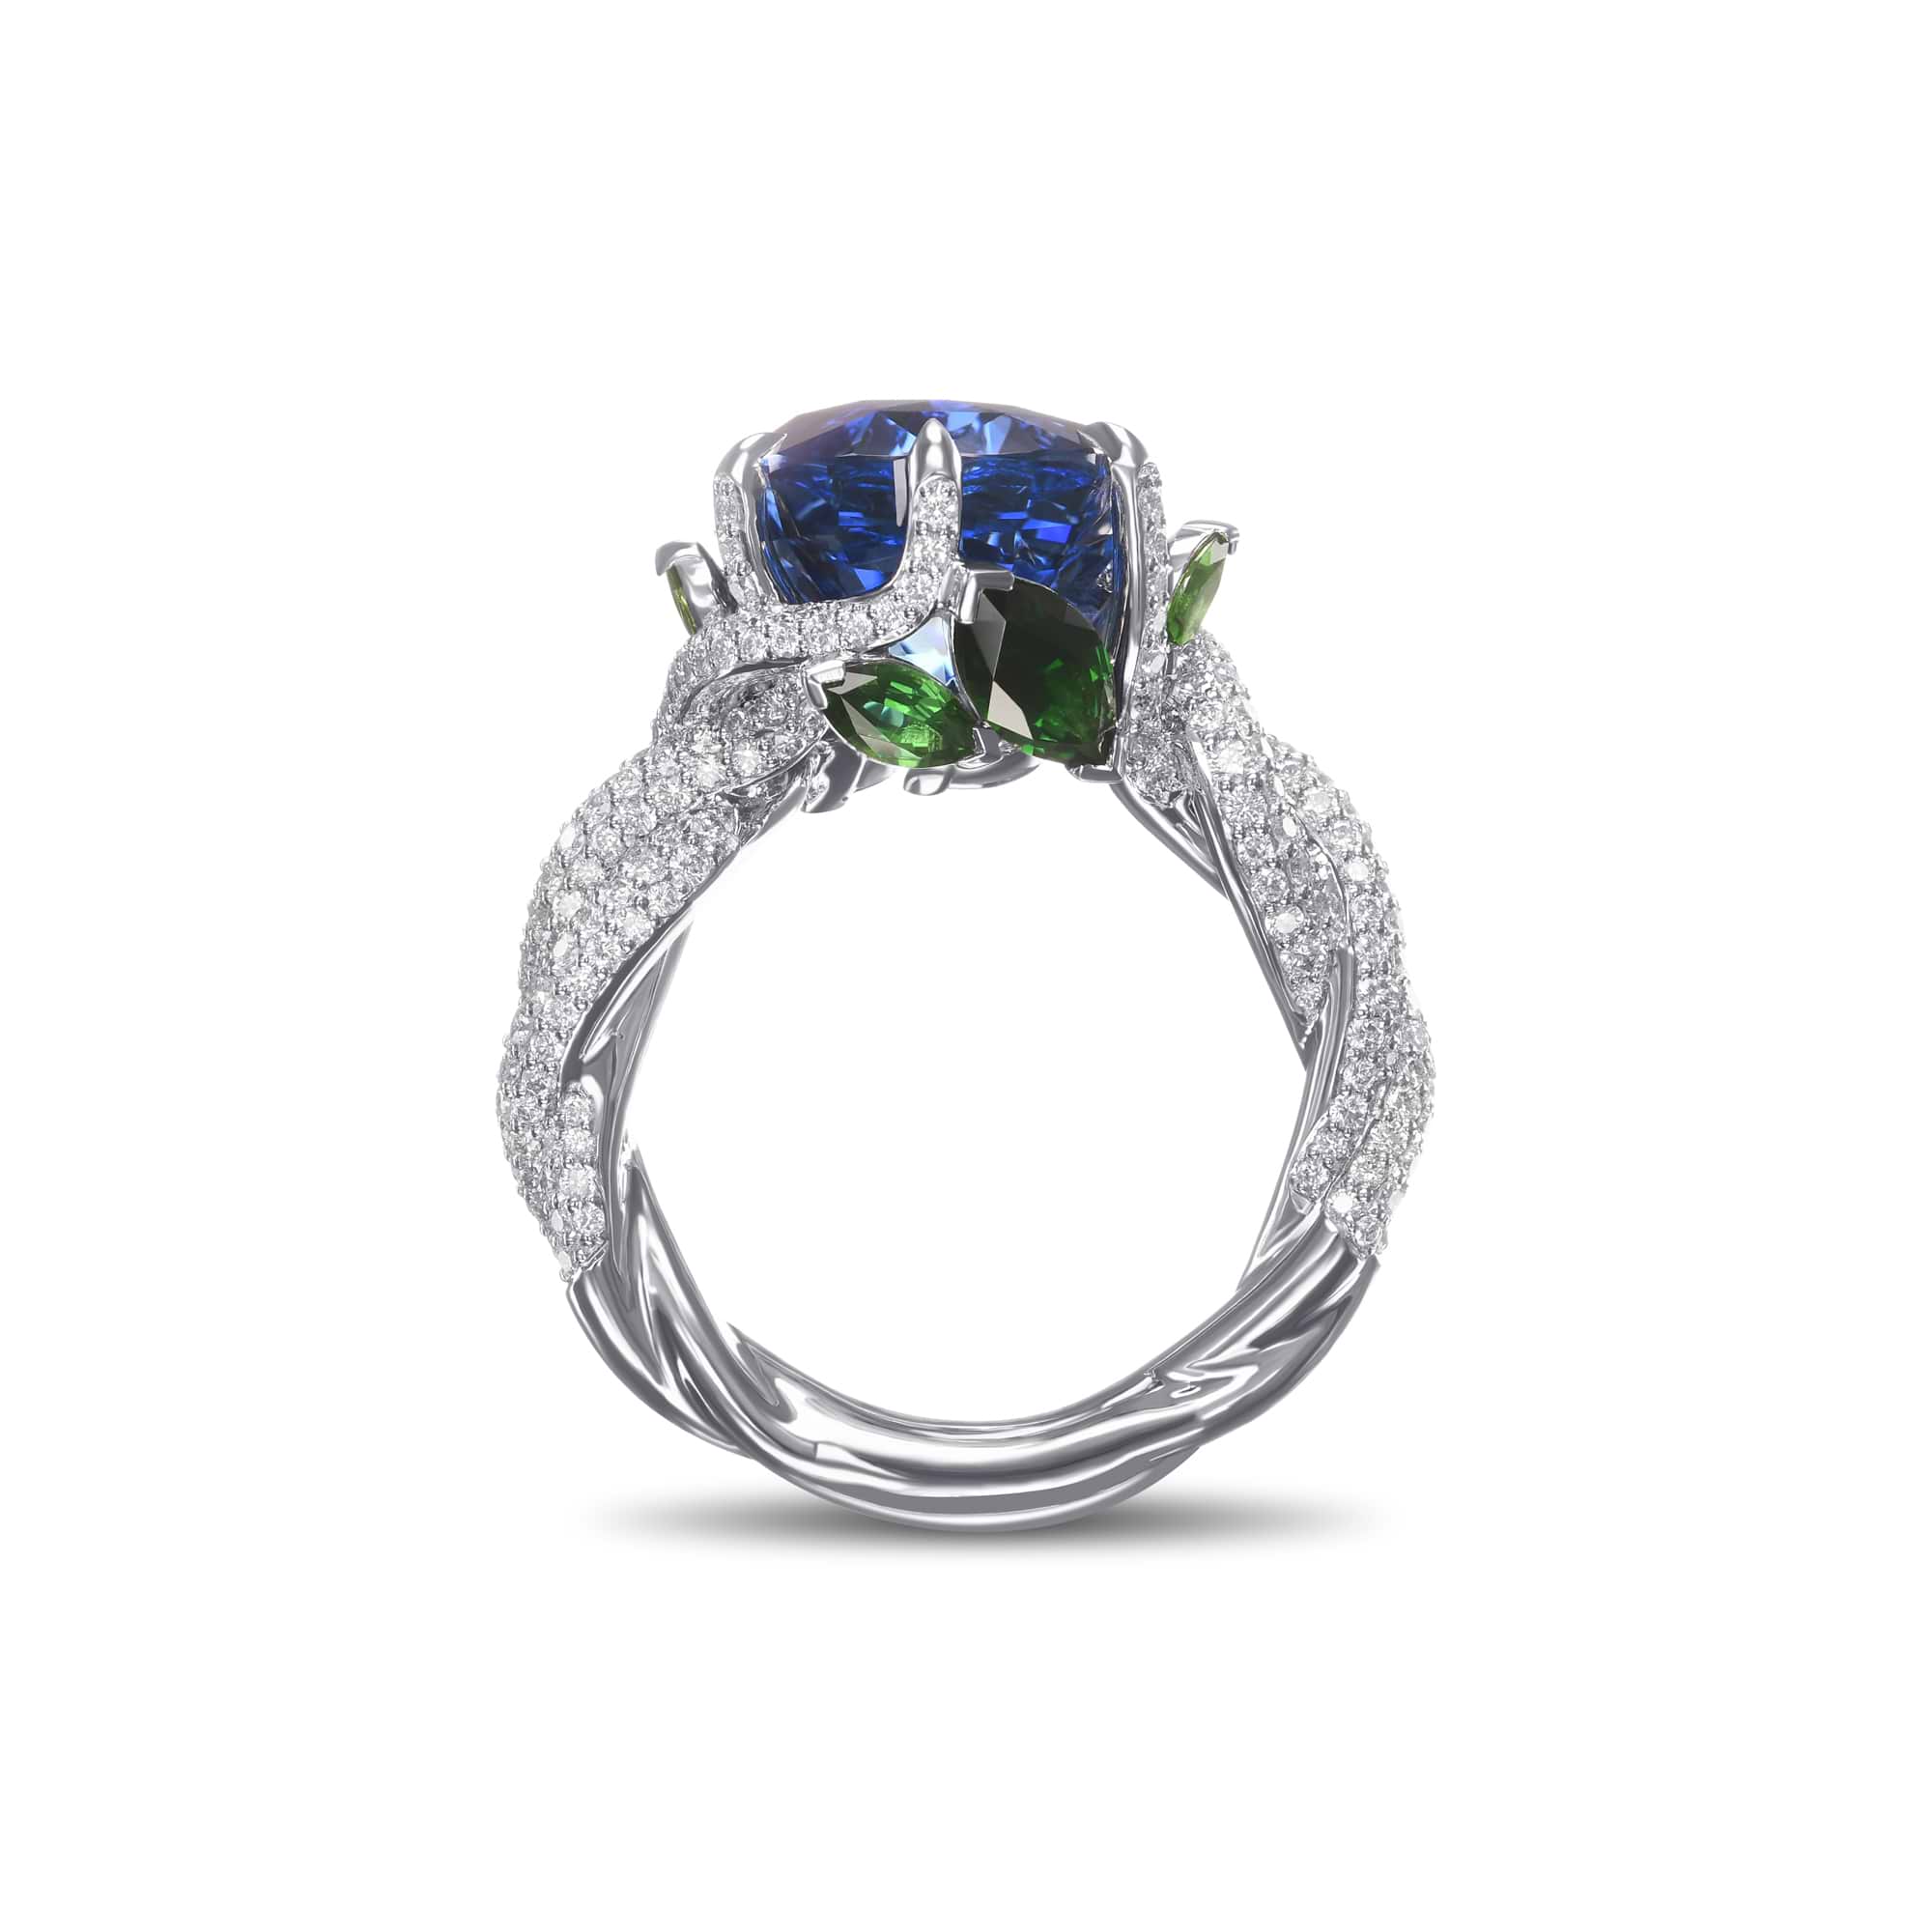 LEIBISH Extraordinary No Heat Oval Sapphire and Diamond Side Stone Ring